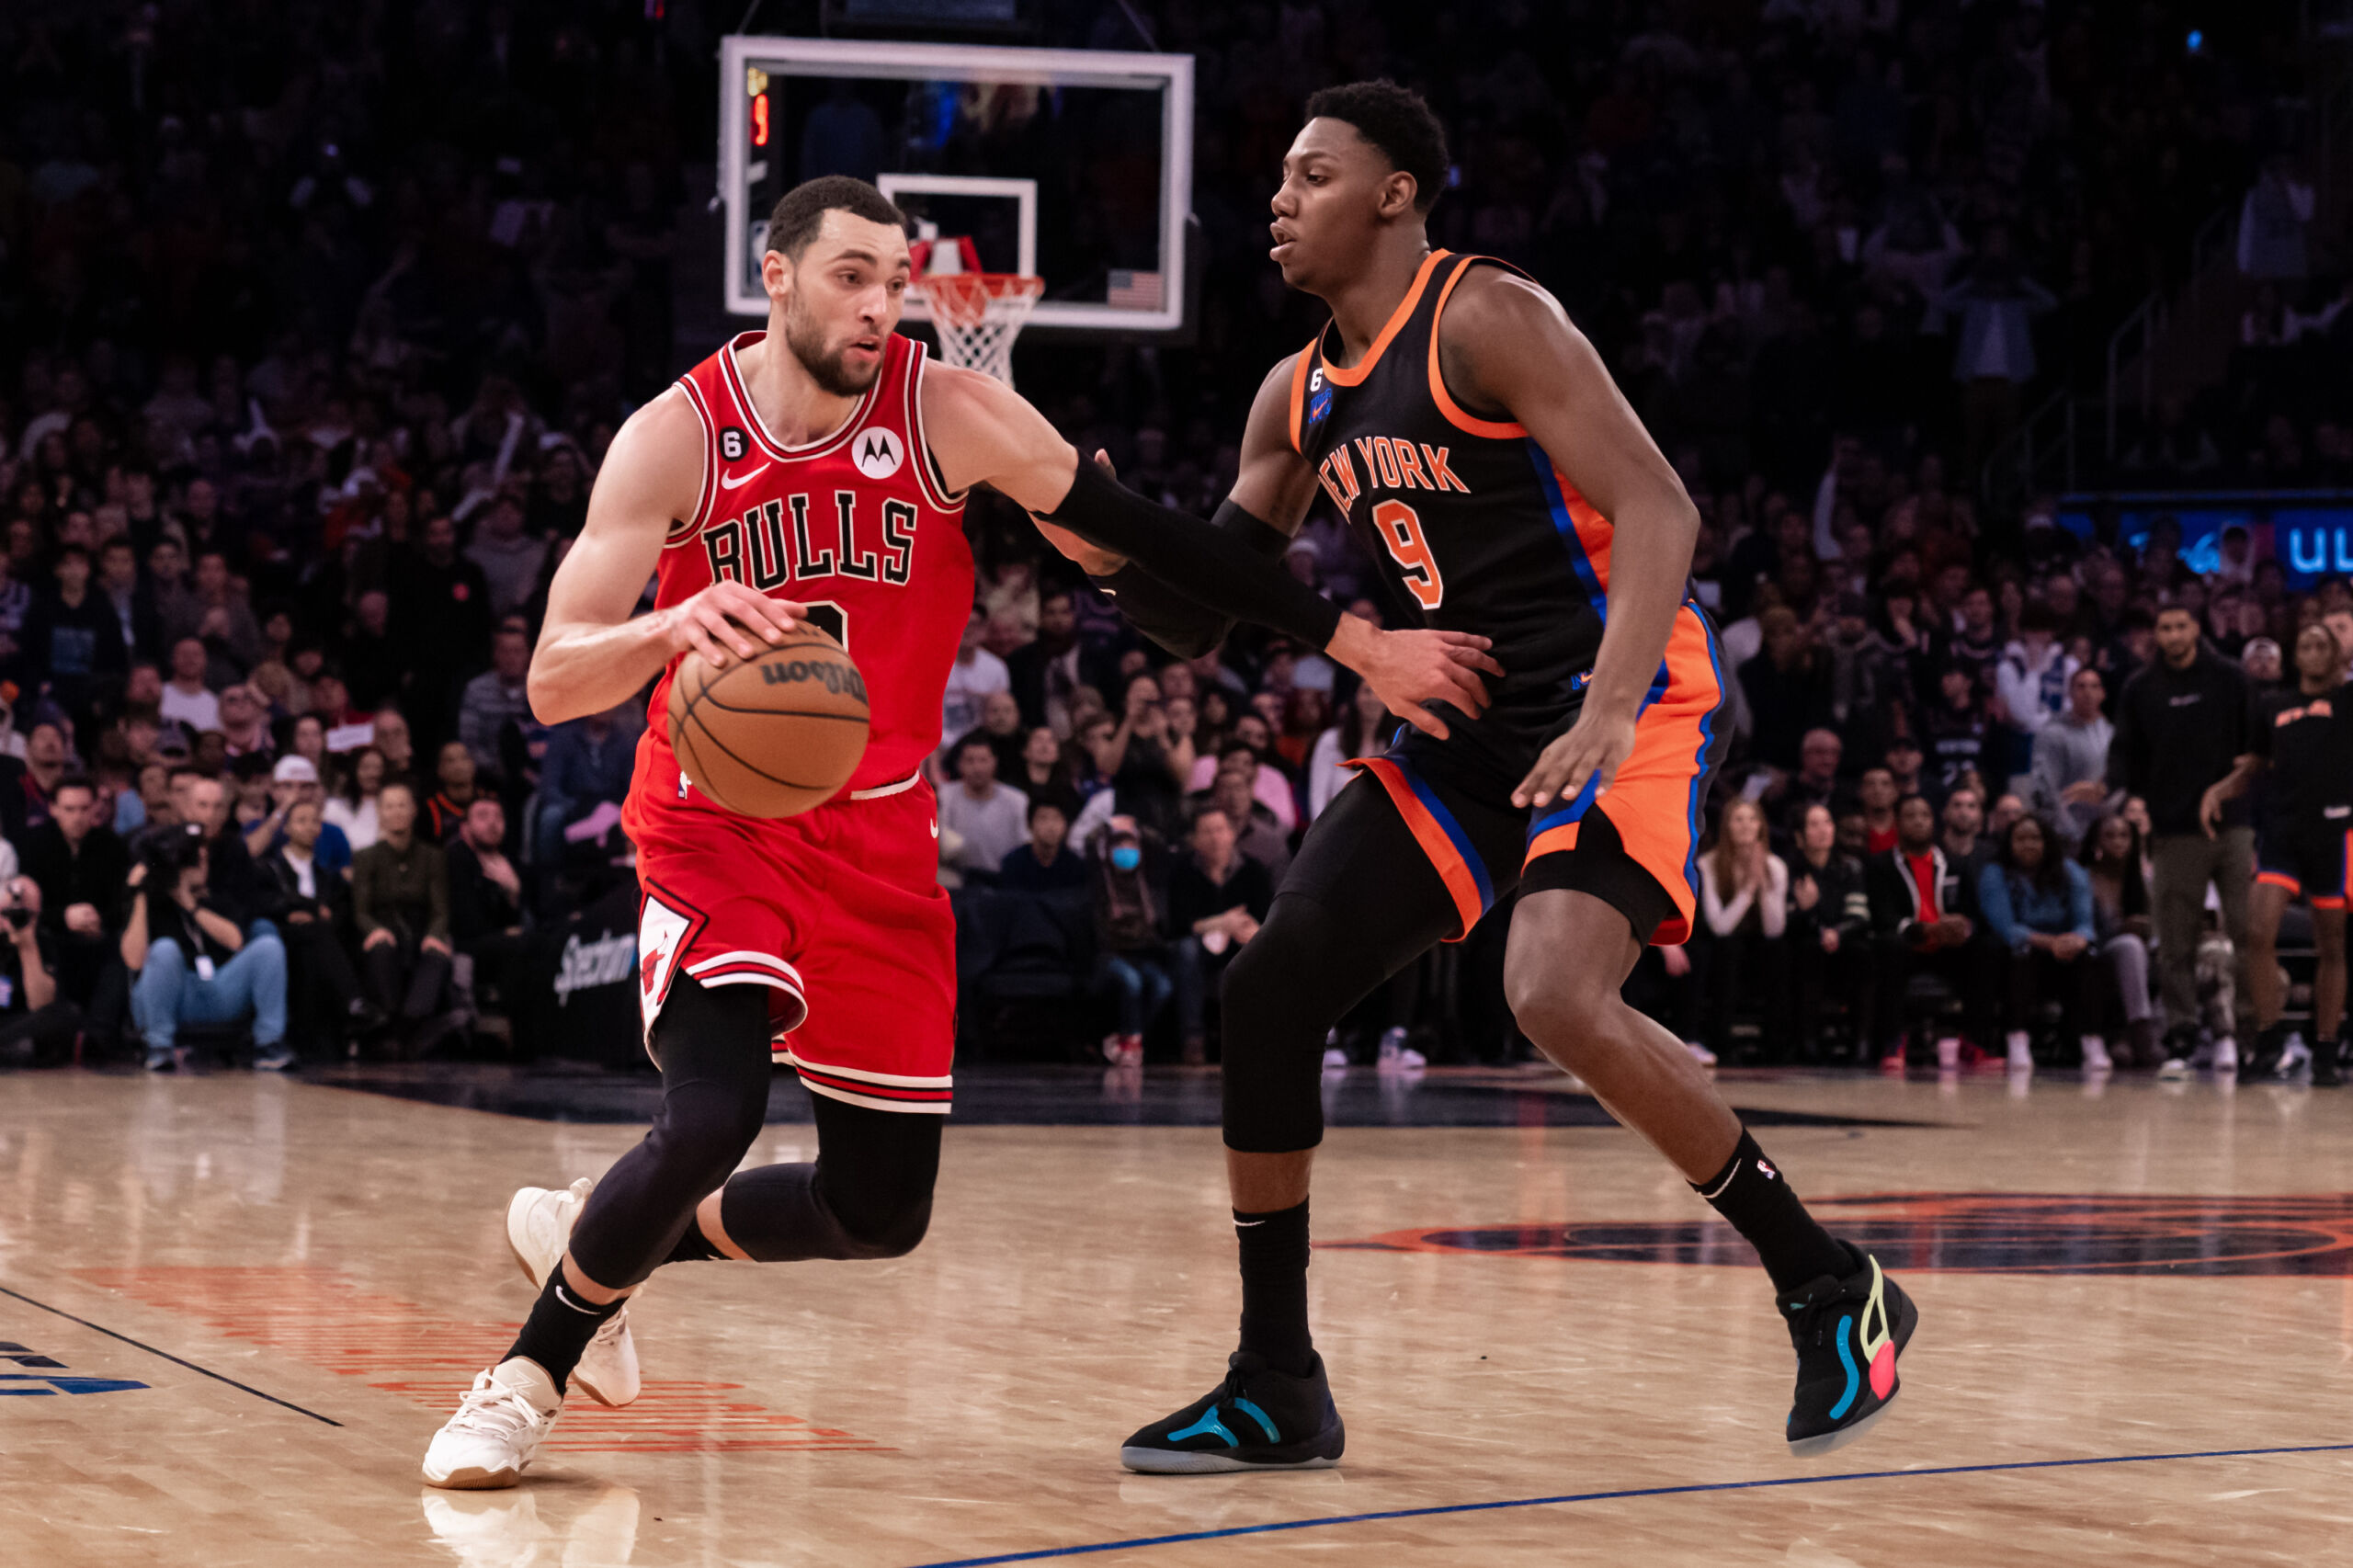 NBA Trade Rumors: Knicks Trade For Bulls Star DeMar DeRozan In